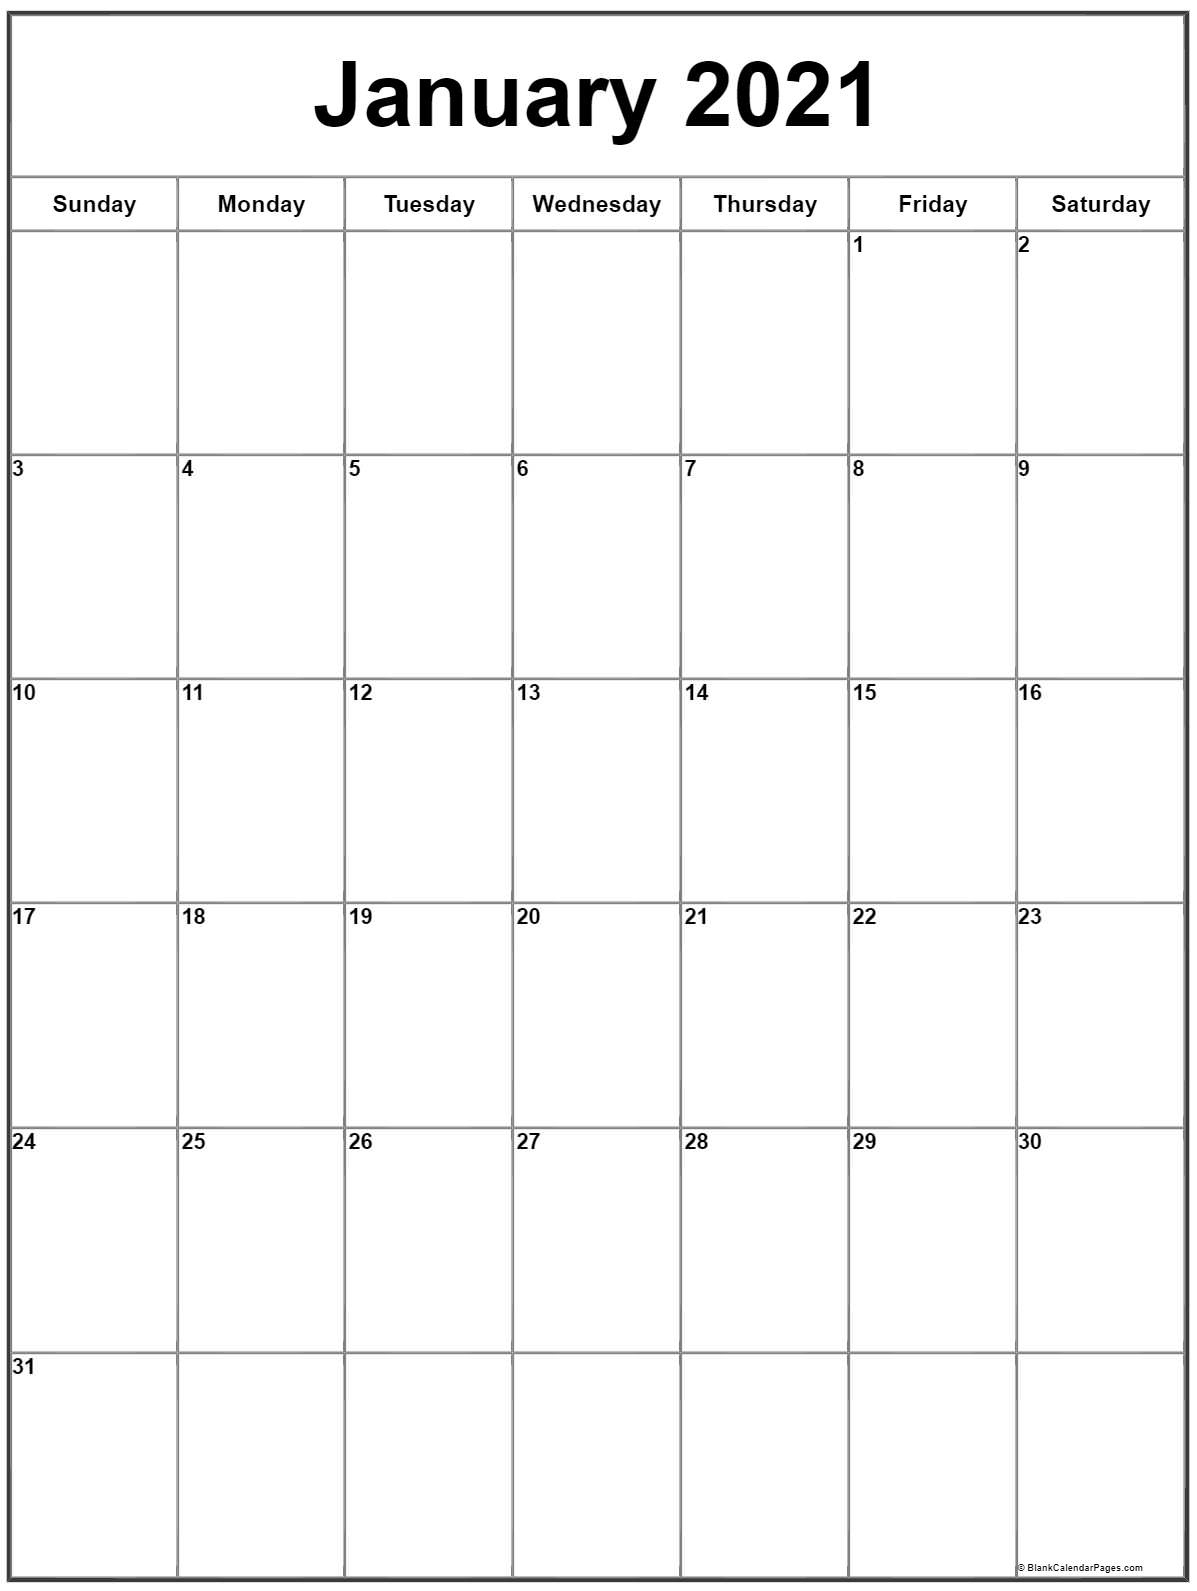 January 2021 Calendar - Calendar 2021 July 2021 Vertical Calendar